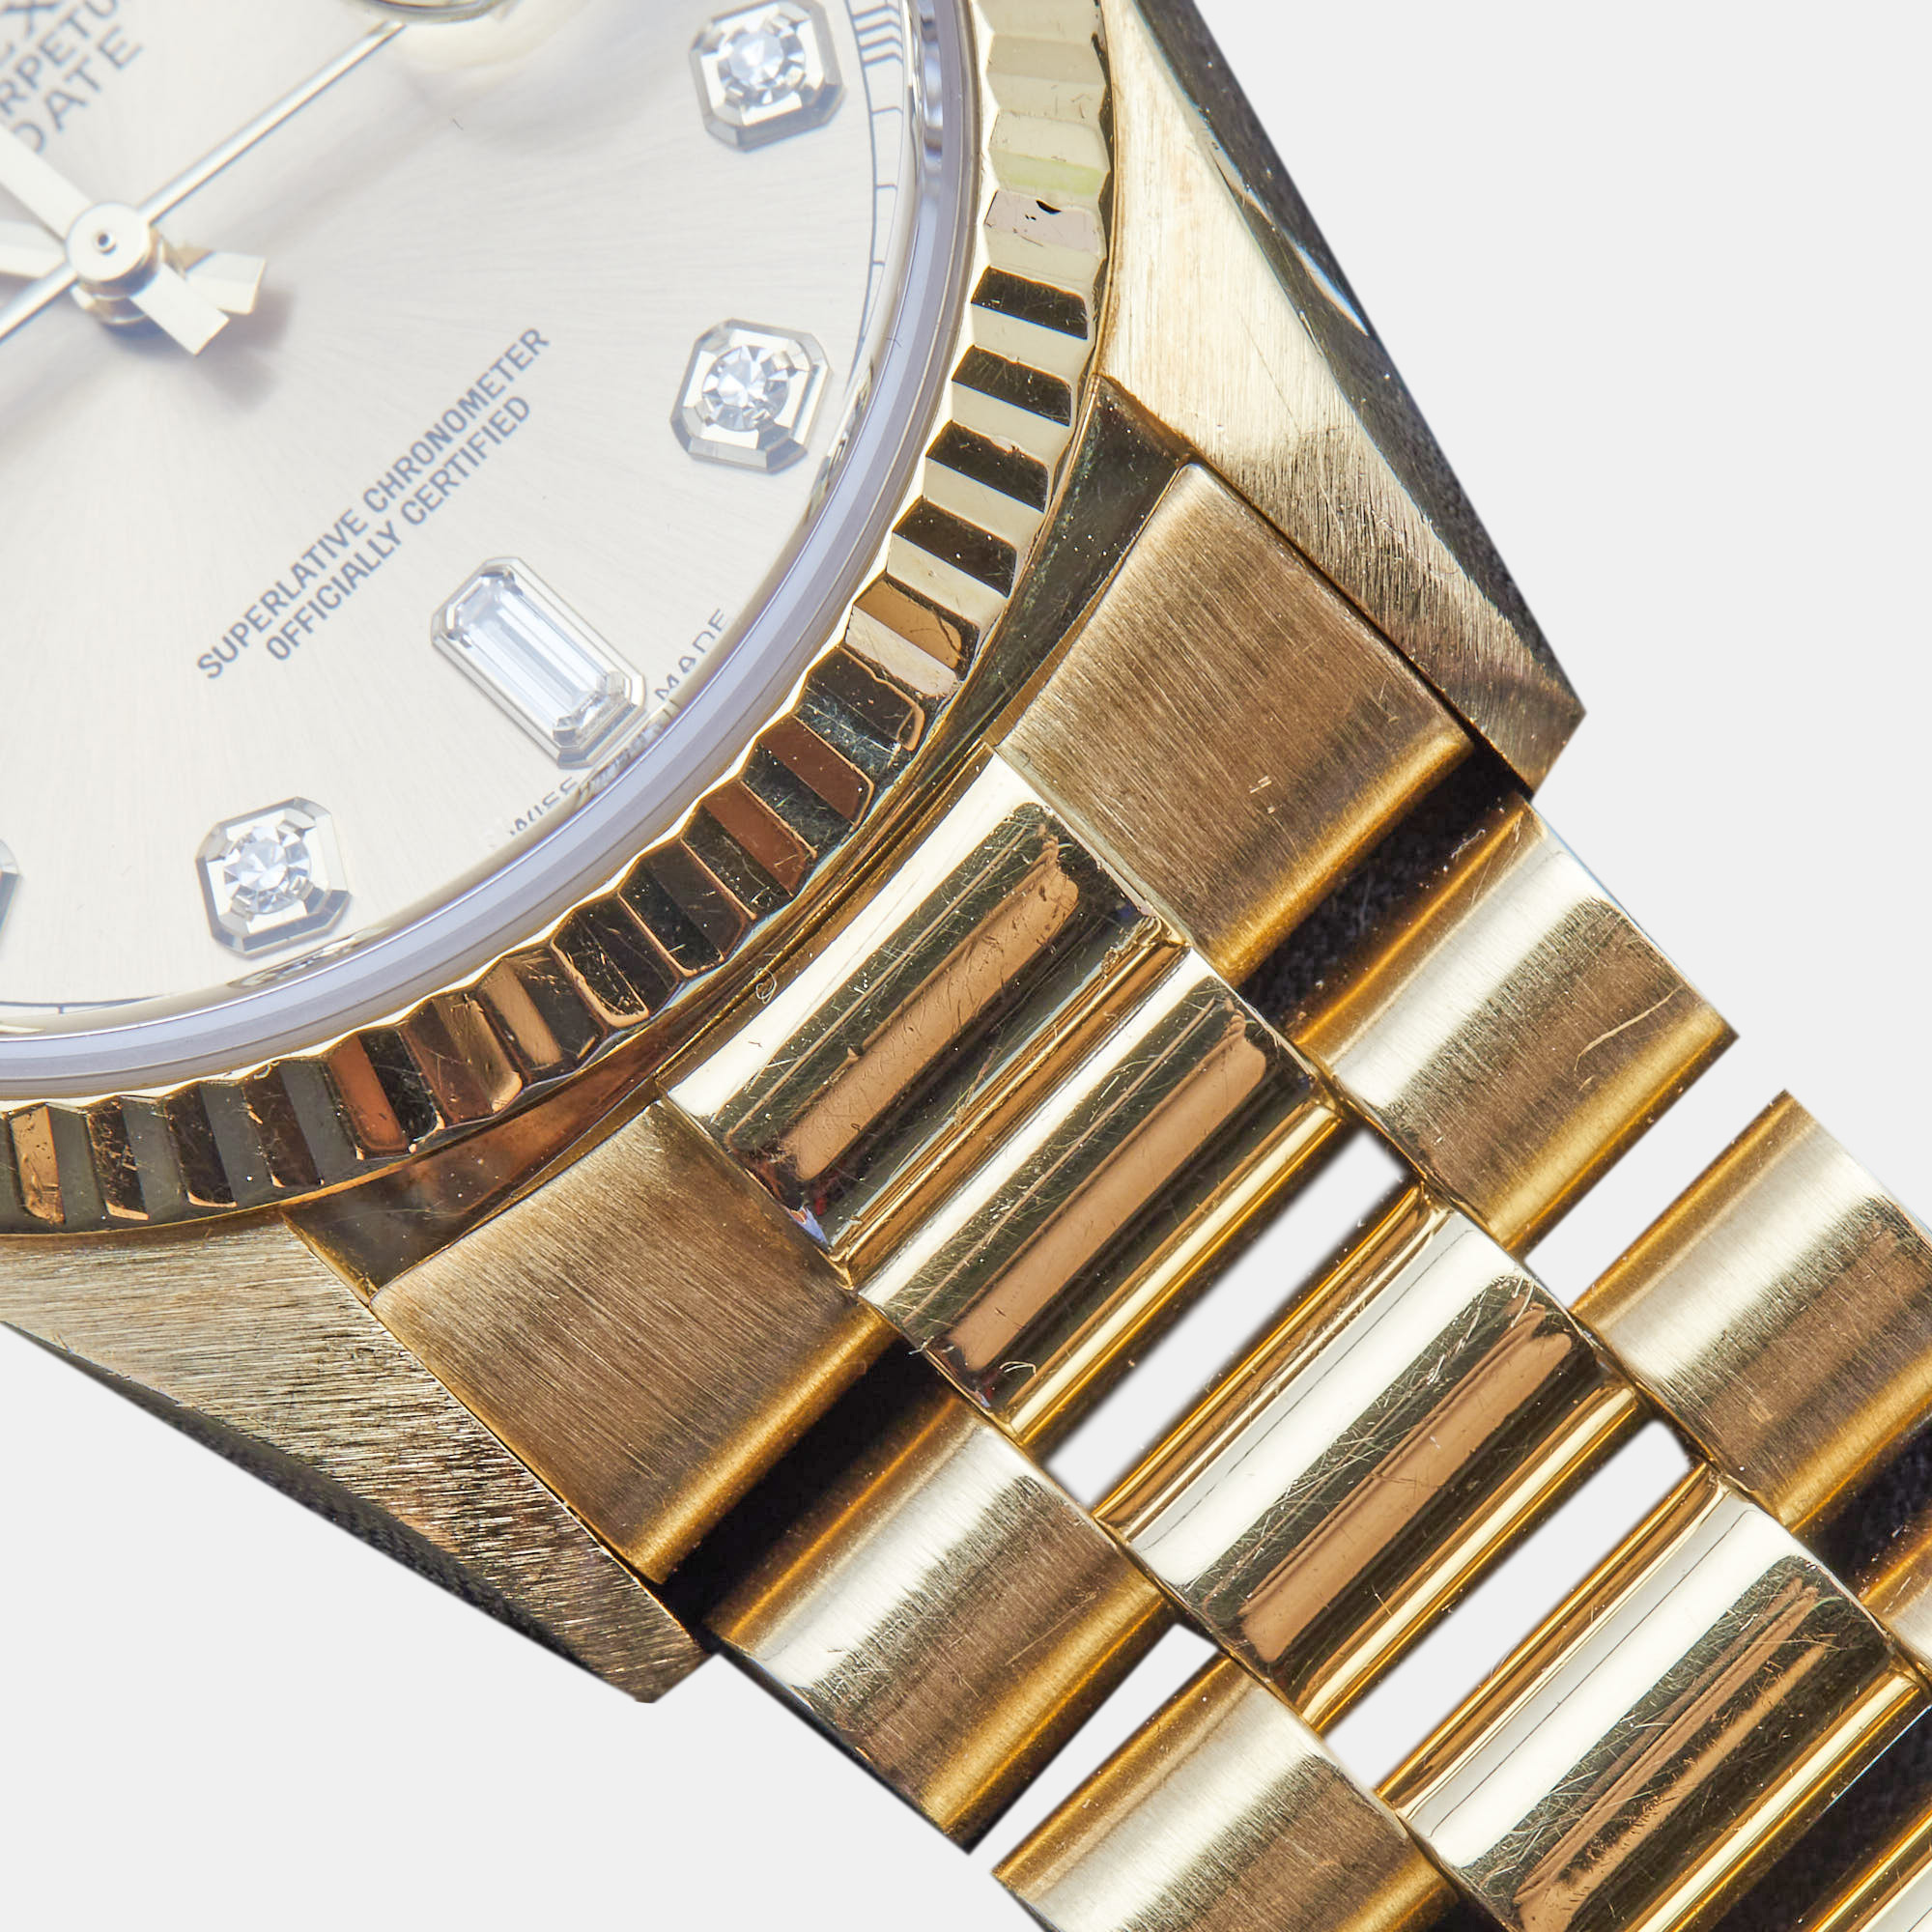 Rolex Champagne Diamond 18K Yellow Gold Day-Date President 18038 Men's Wristwatch 36 Mm